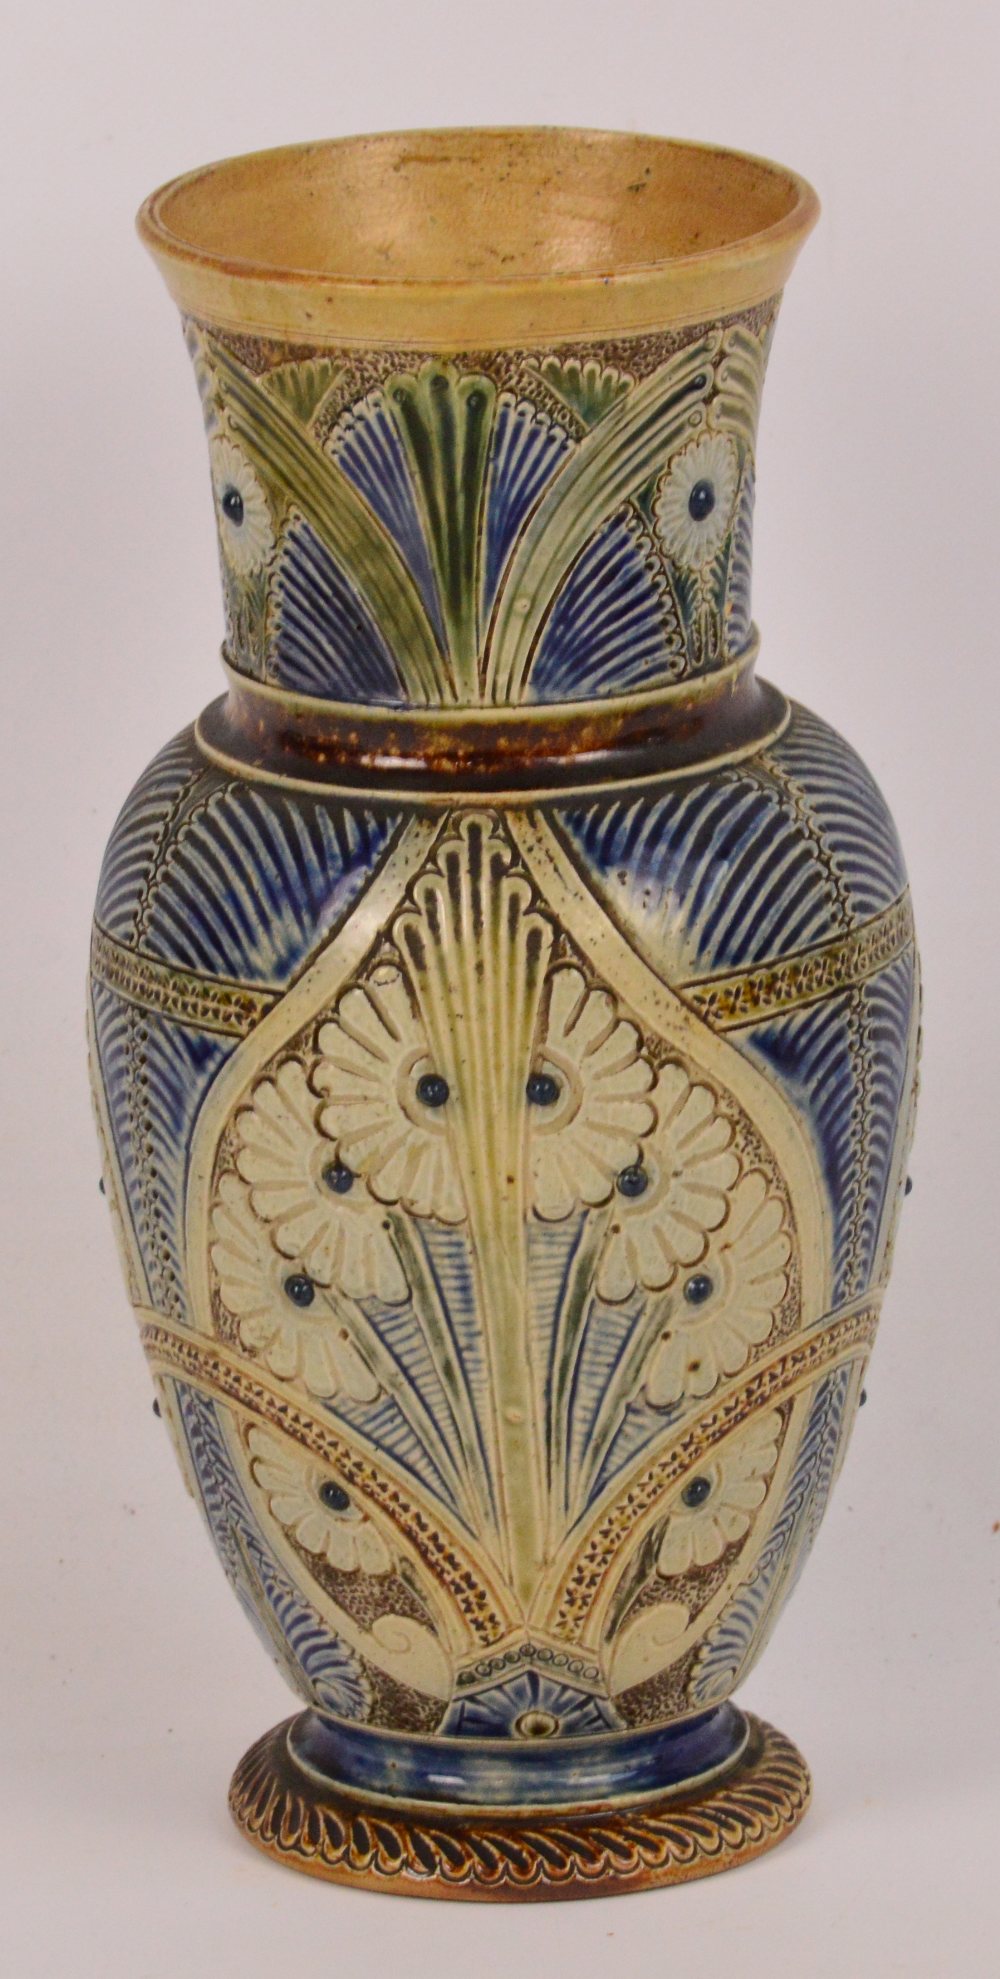 ROBERT WALLACE MARTIN (1843-1924) for Martin Brothers, London; a salt glazed vase, engraved floral - Image 2 of 6